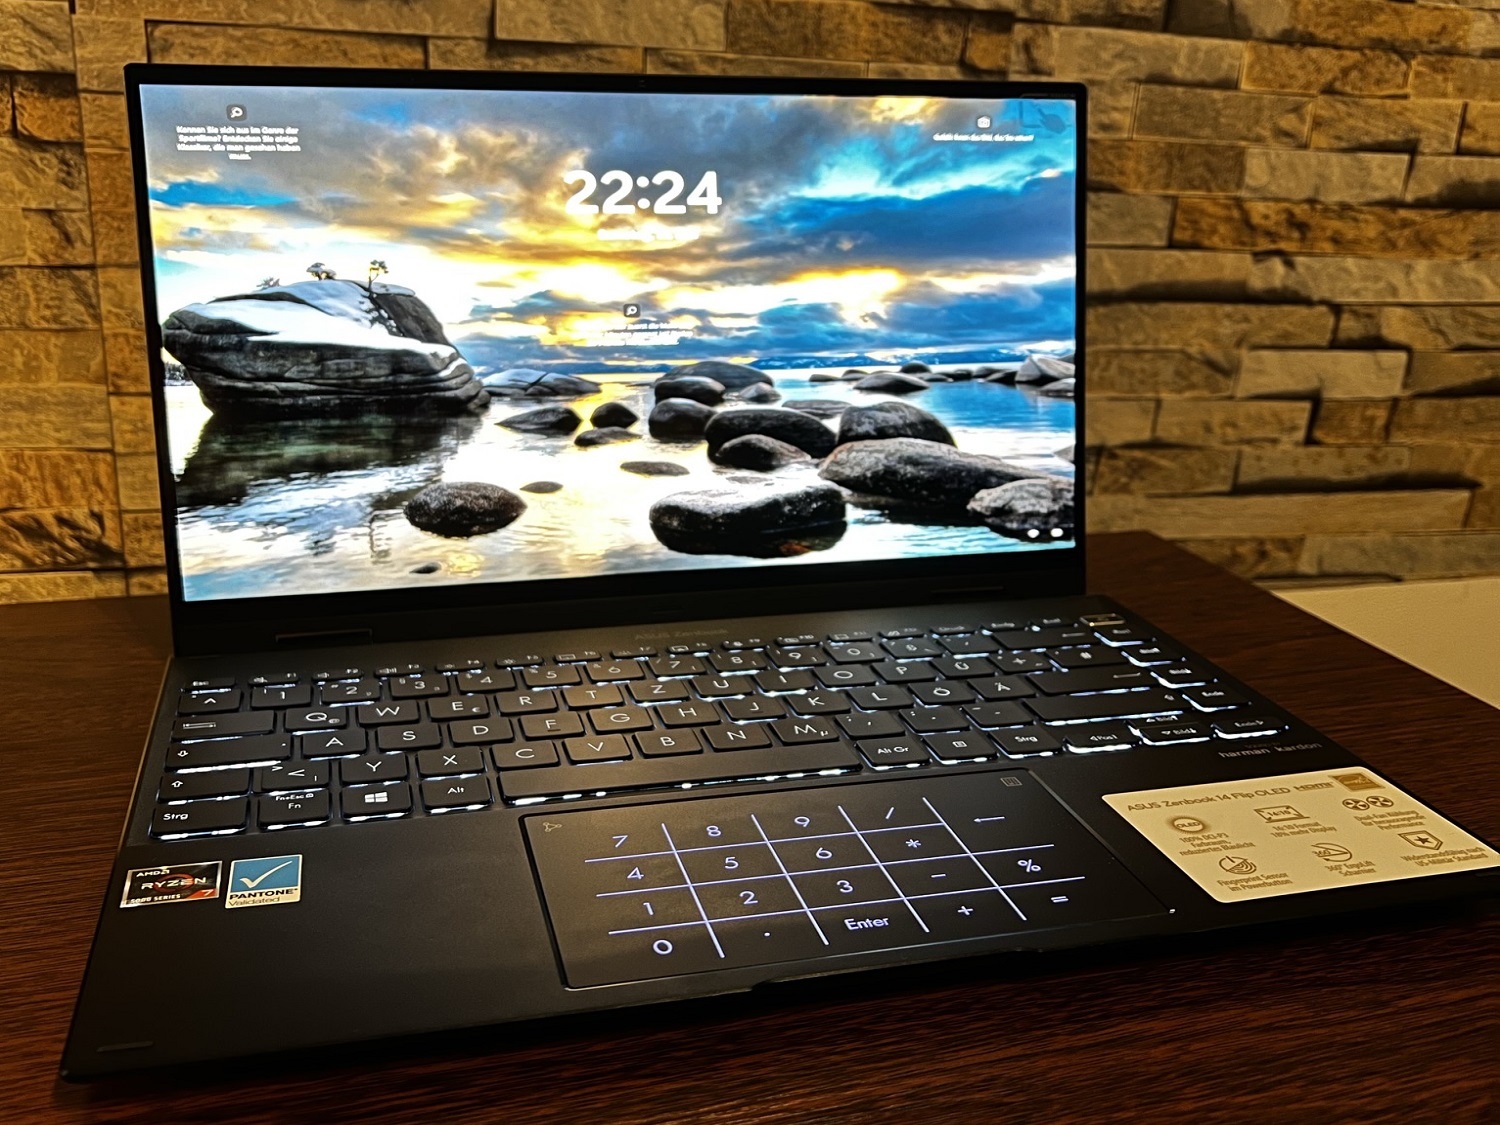 Asus ZenBook Flip S 13 review: an eye-catching 2-in-1 laptop